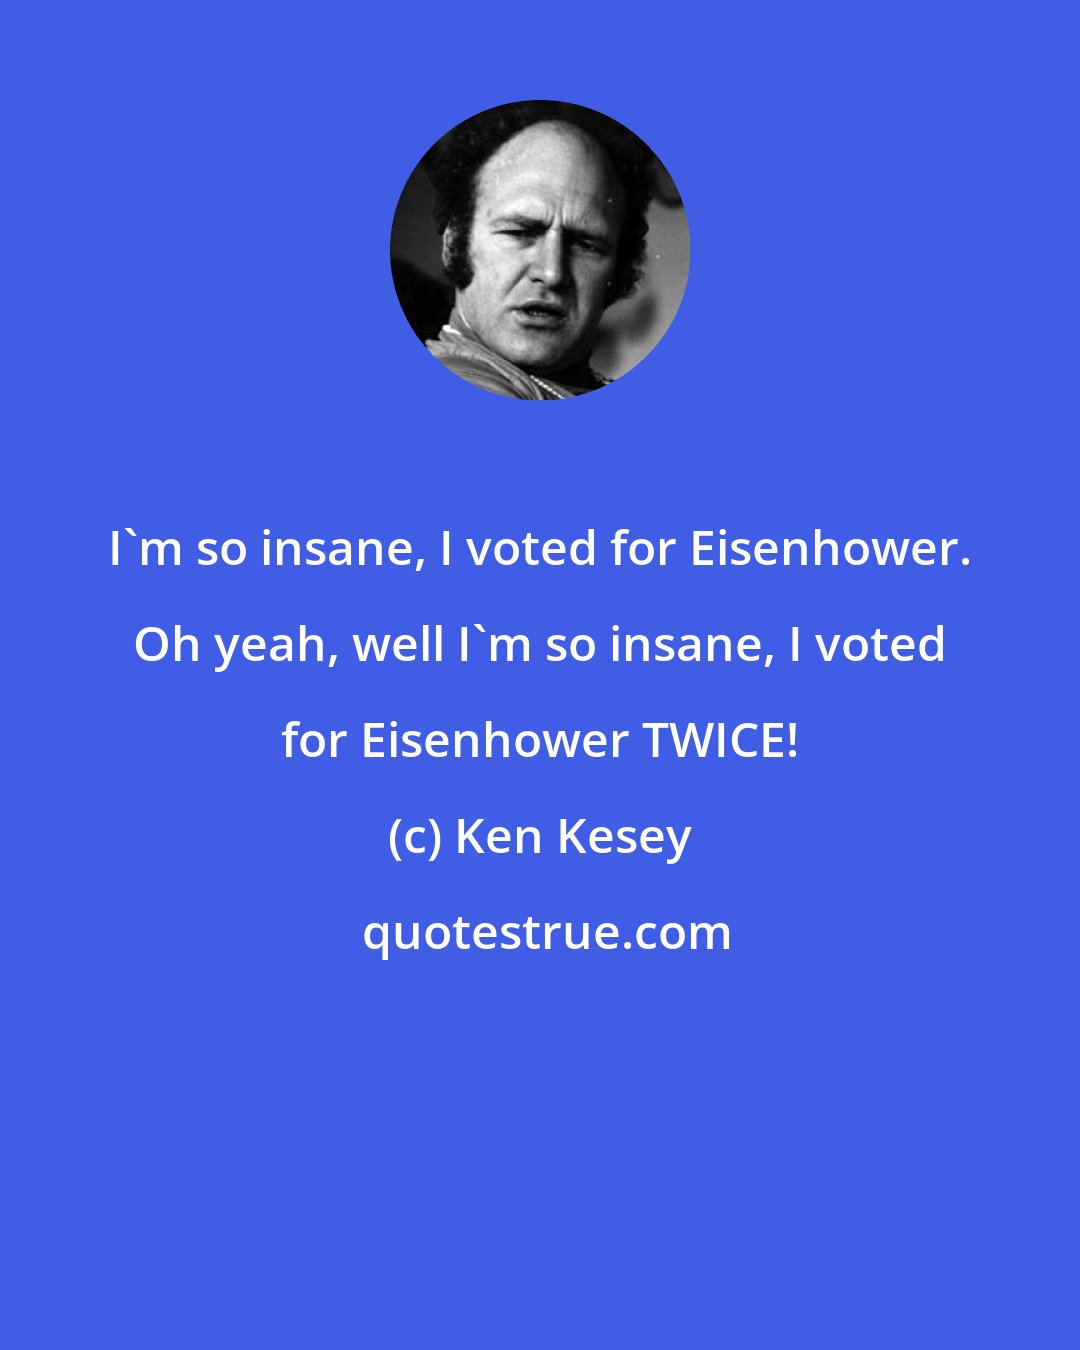 Ken Kesey: I'm so insane, I voted for Eisenhower. Oh yeah, well I'm so insane, I voted for Eisenhower TWICE!